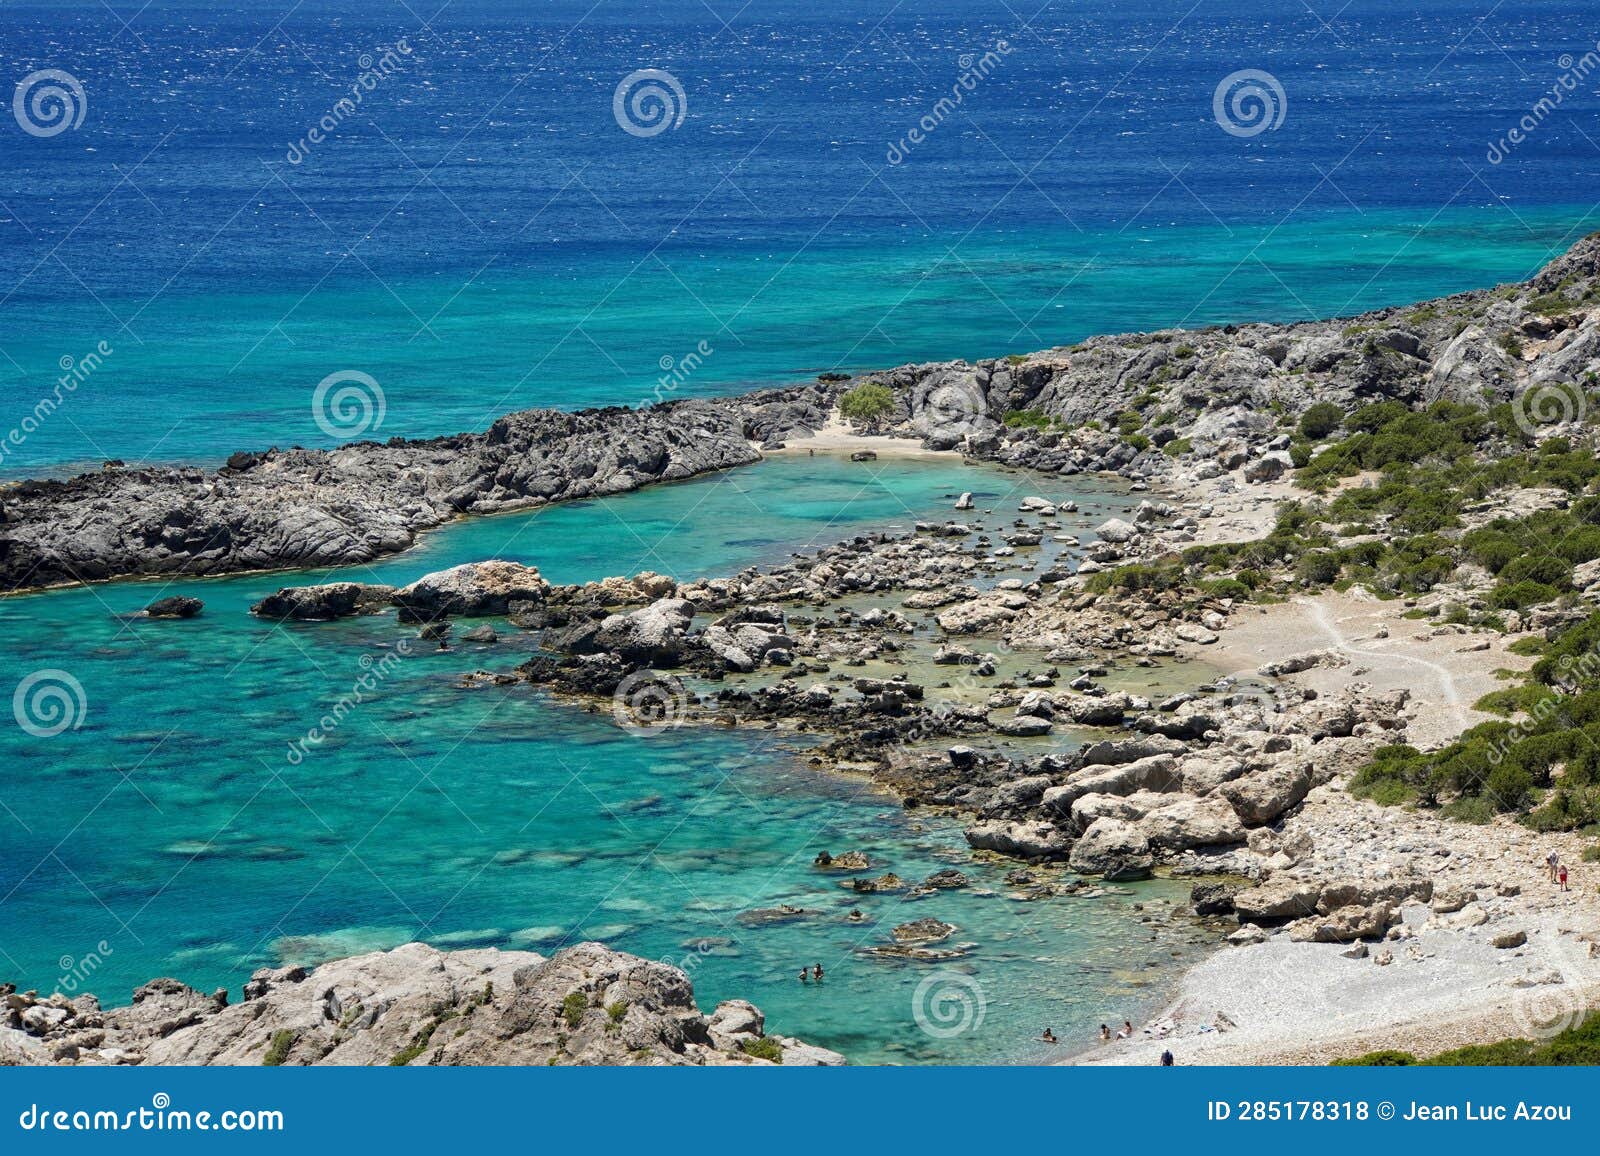 viena beach in paleochora, crete